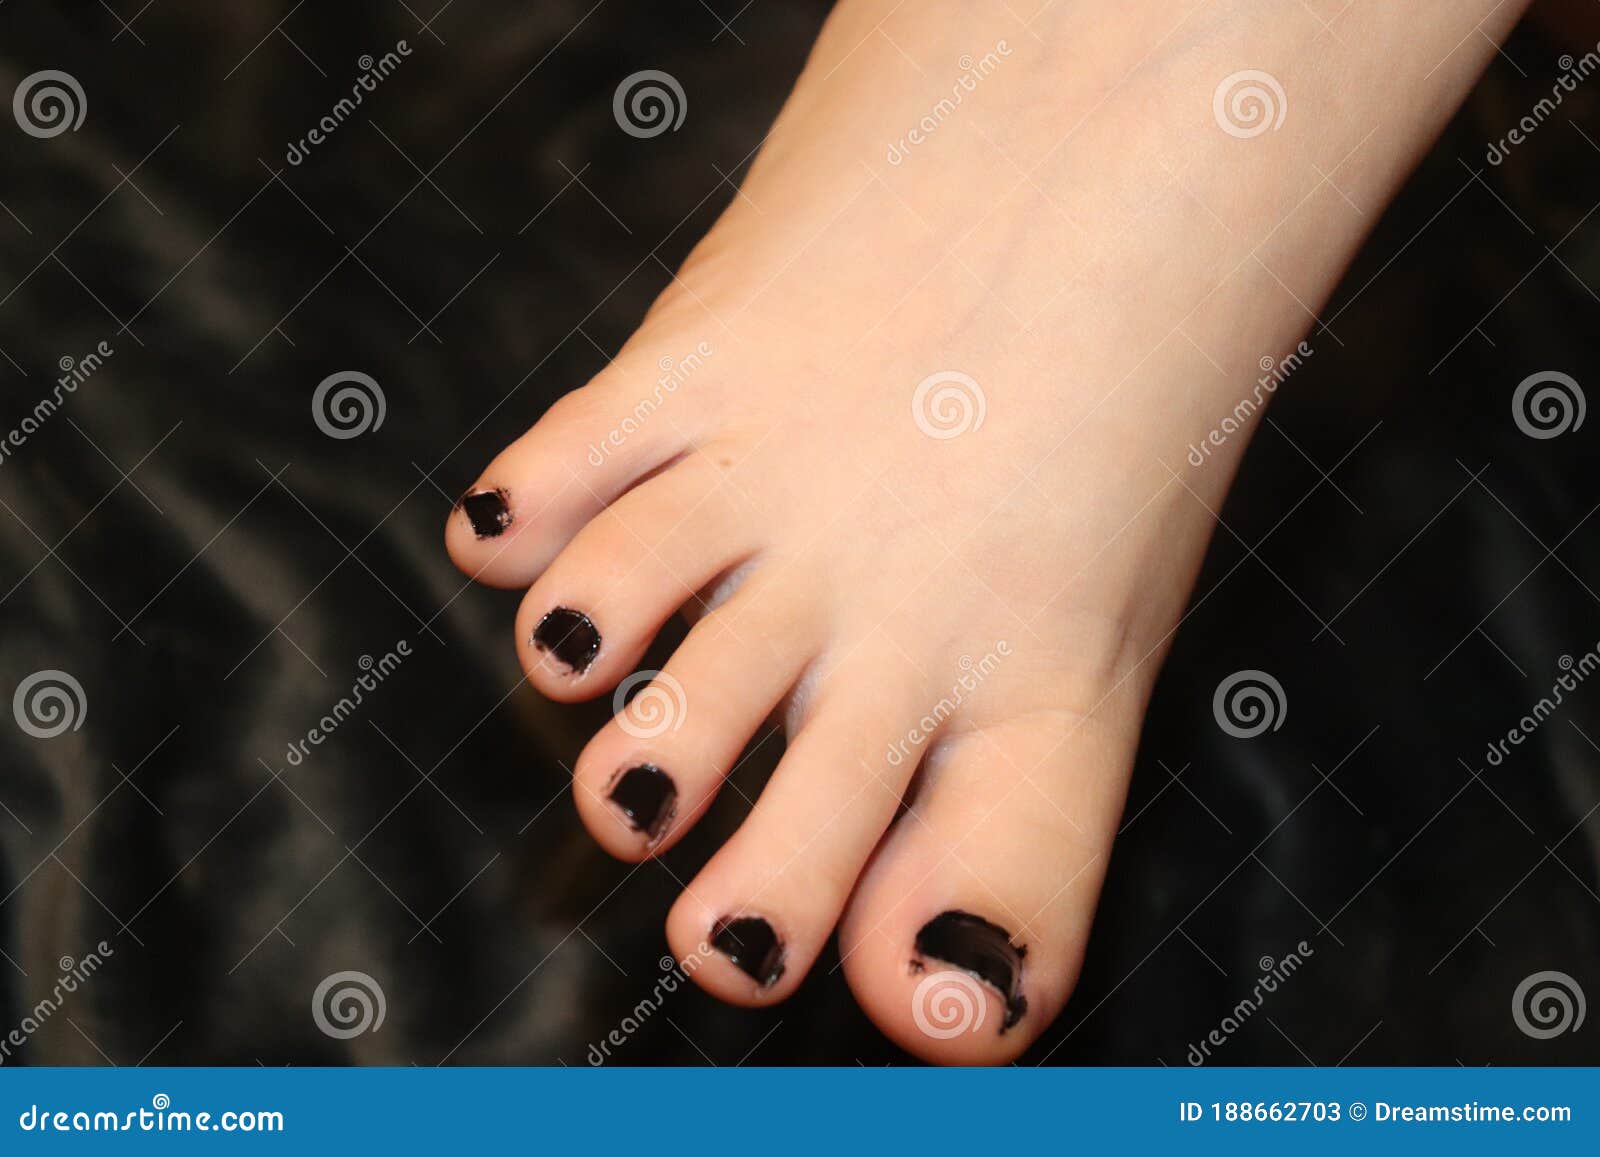 dark haired amateur feet